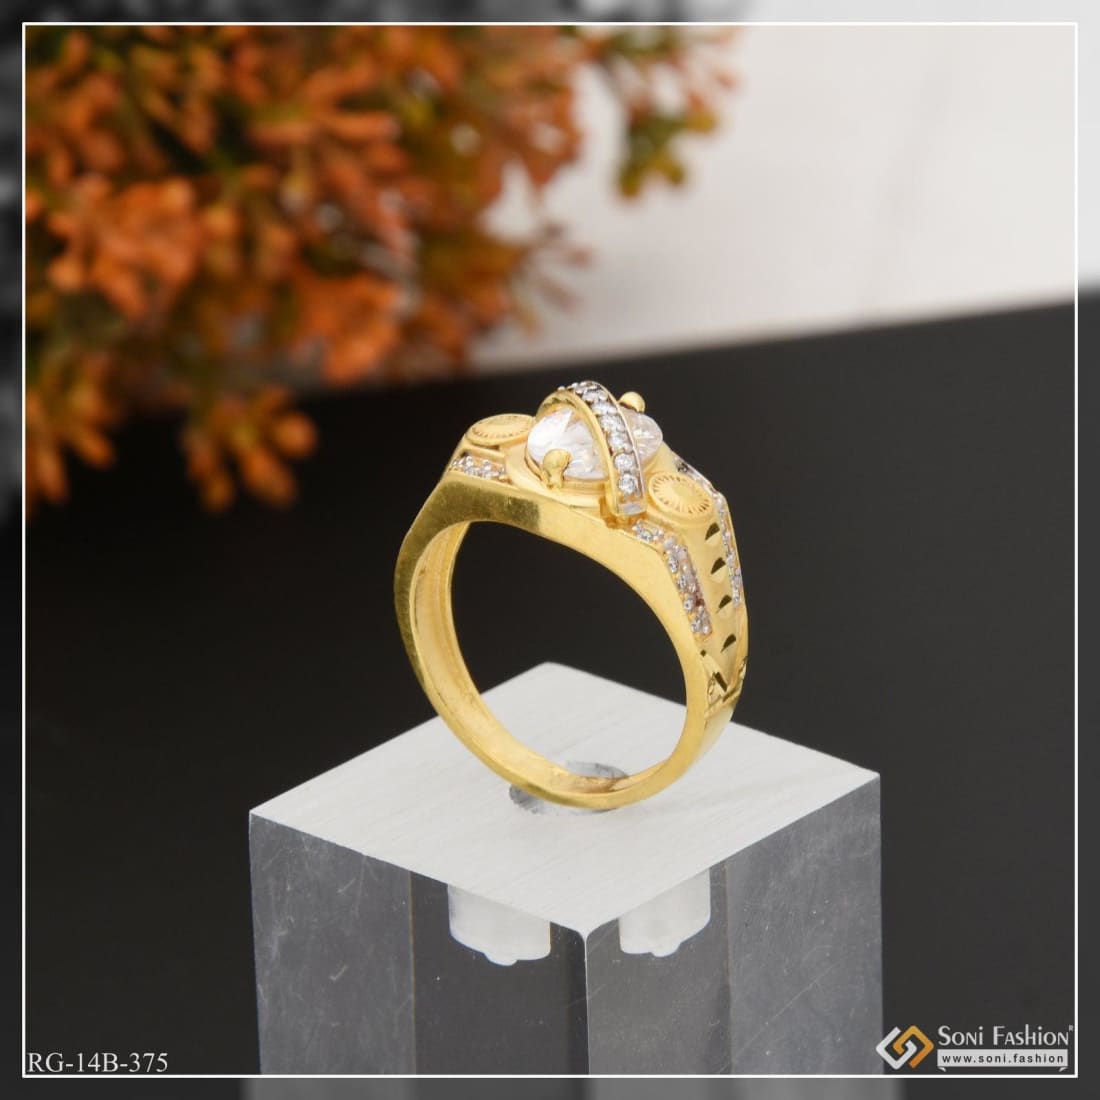 Jamindar cz white stone ring for men | Stone rings for men, Gold earrings  with price, Rings for men